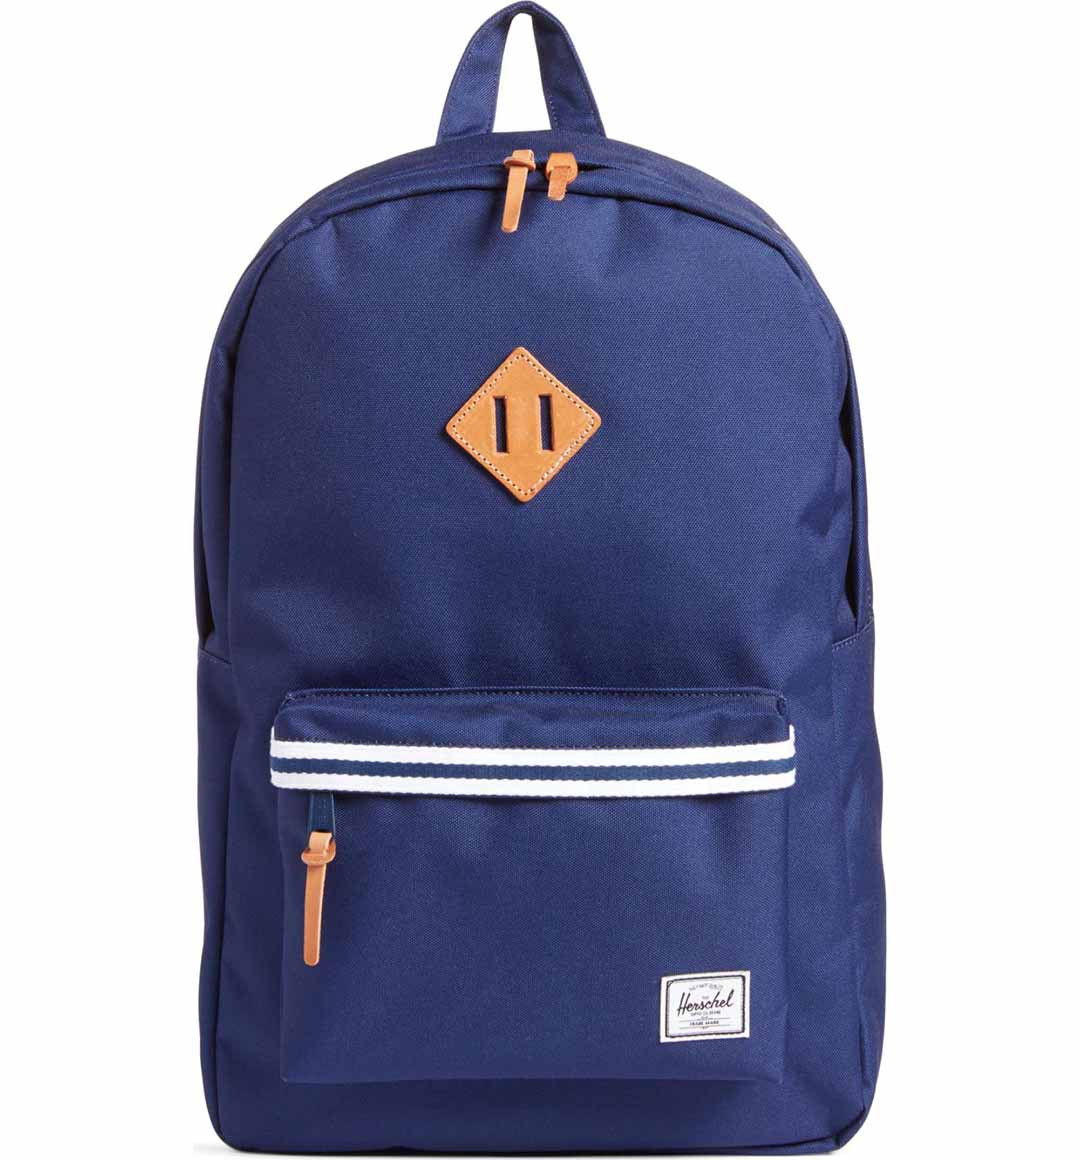 Back To School Backpacks
 Trendy Backpacks Under $100 for Back To School 2017